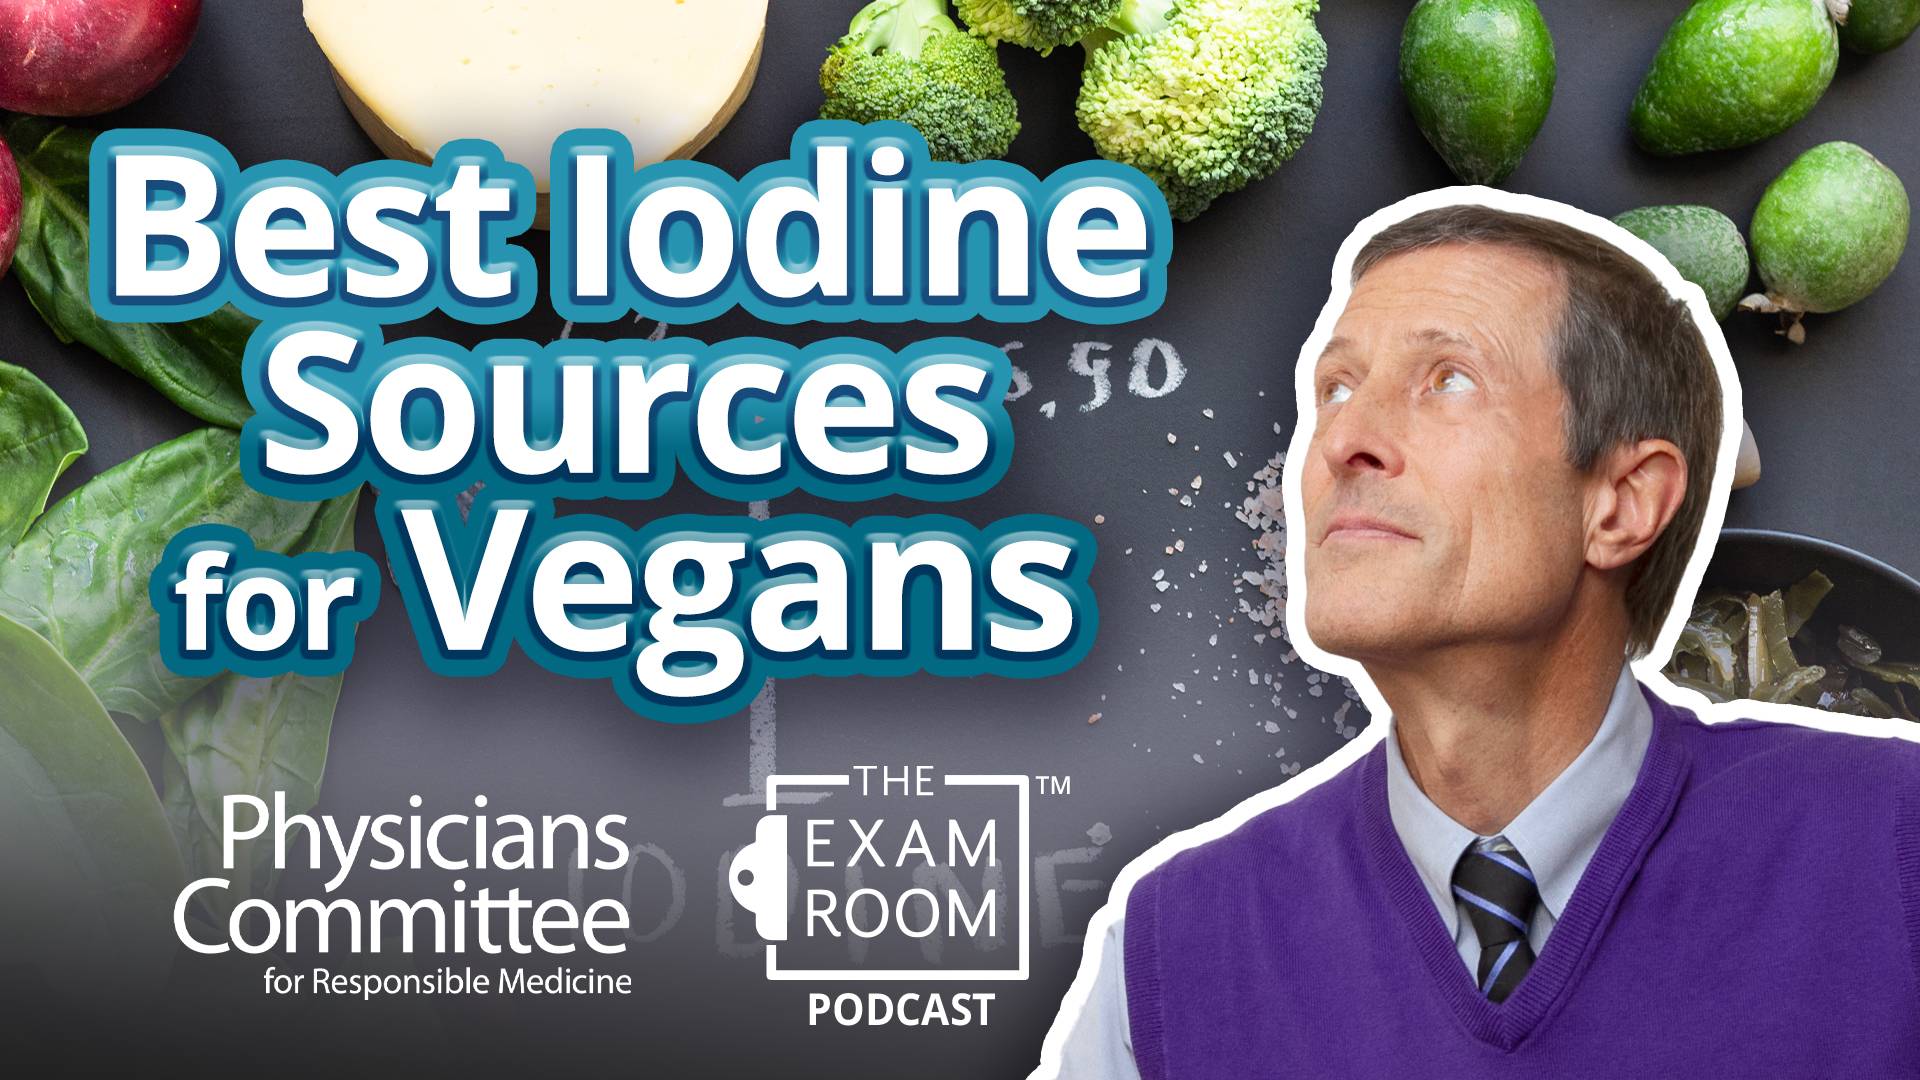 Best Iodine Sources for Vegans